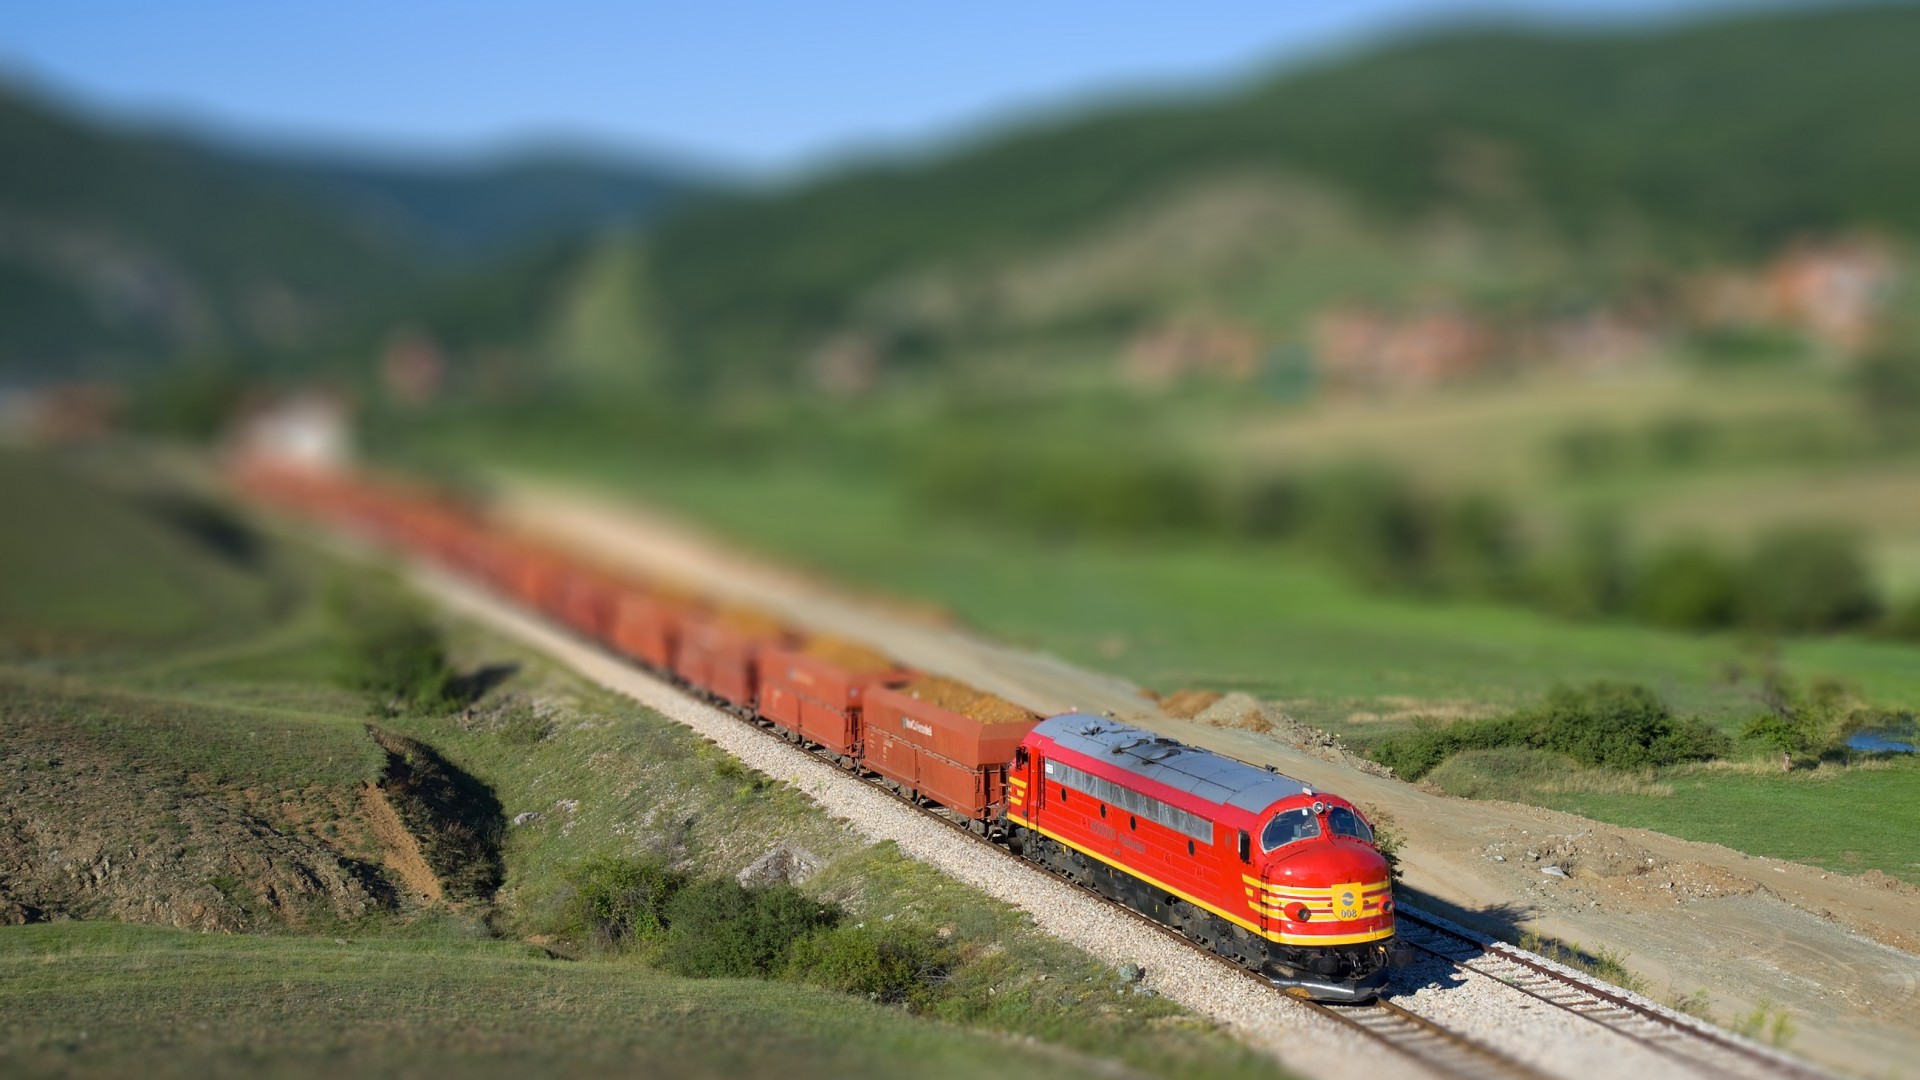 General 1920x1080 train blurred tilt shift vehicle